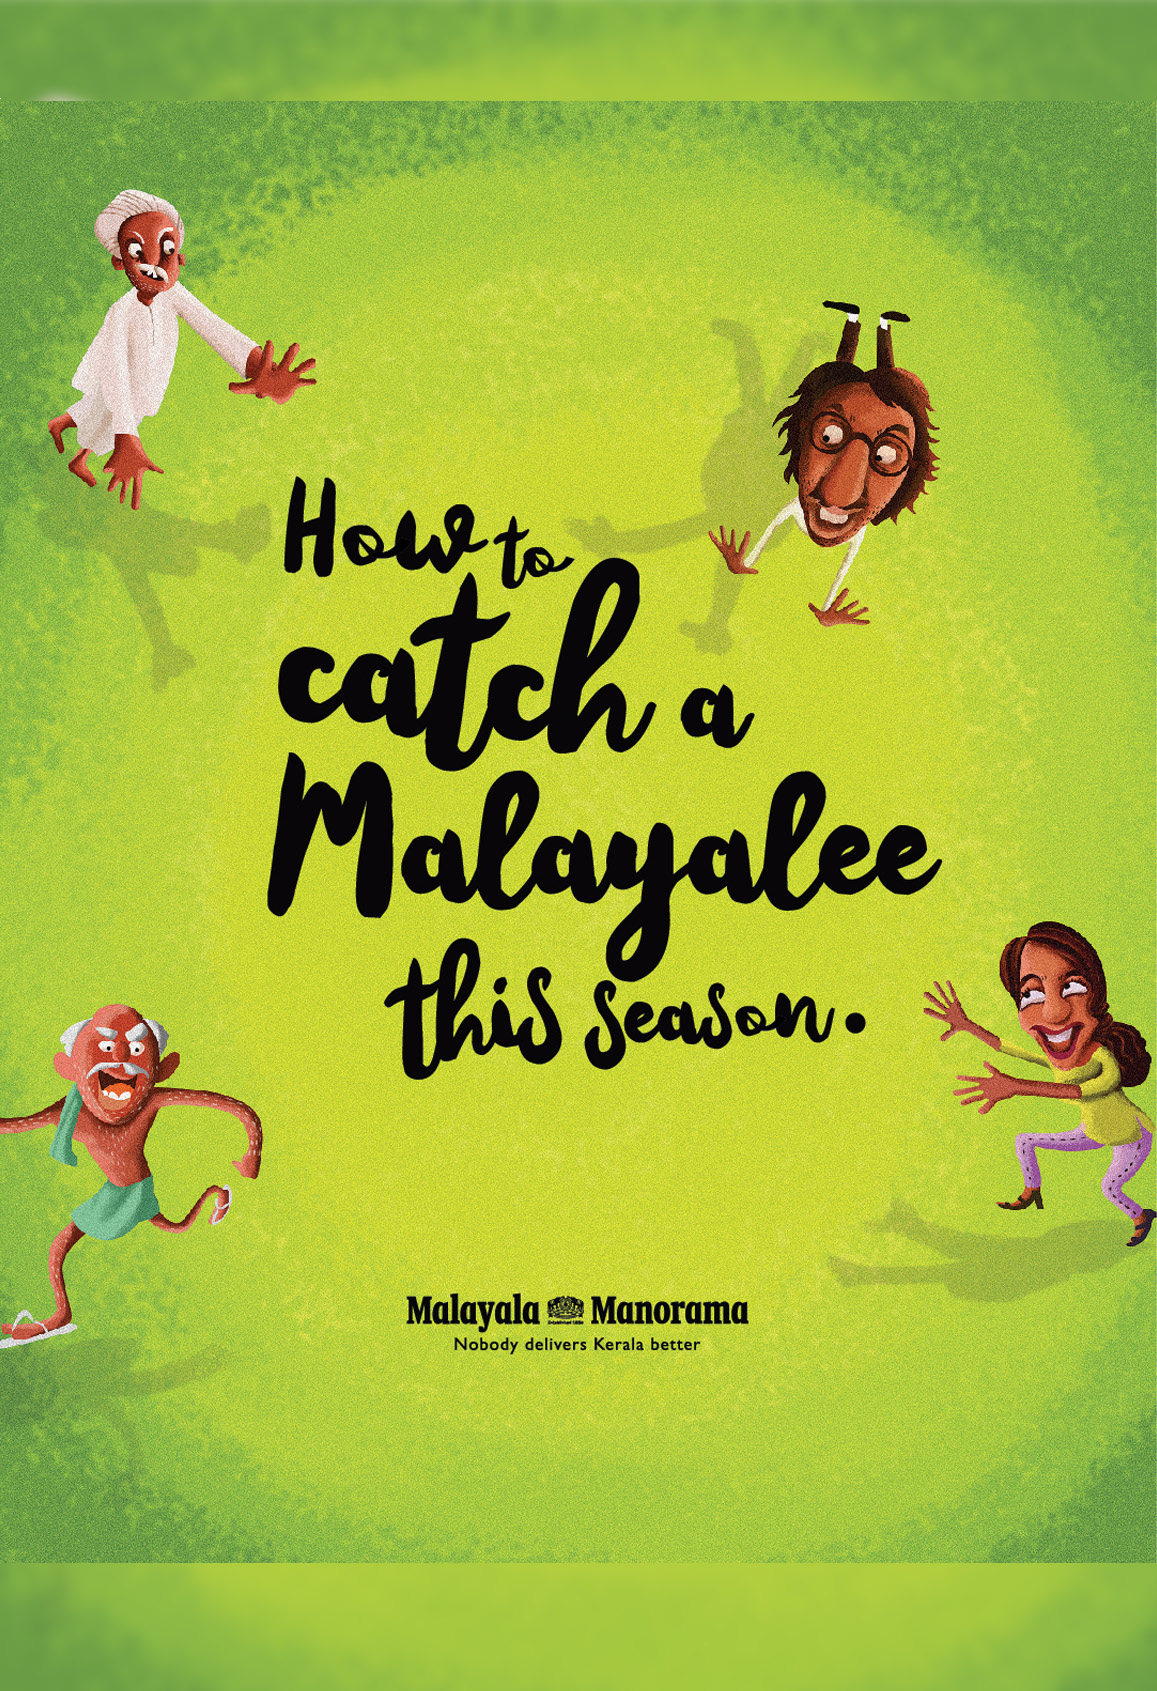 How to Catch a Malayalee by Malayala Manorama | Print mock-up 5 by Stark Communications Pvt Ltd